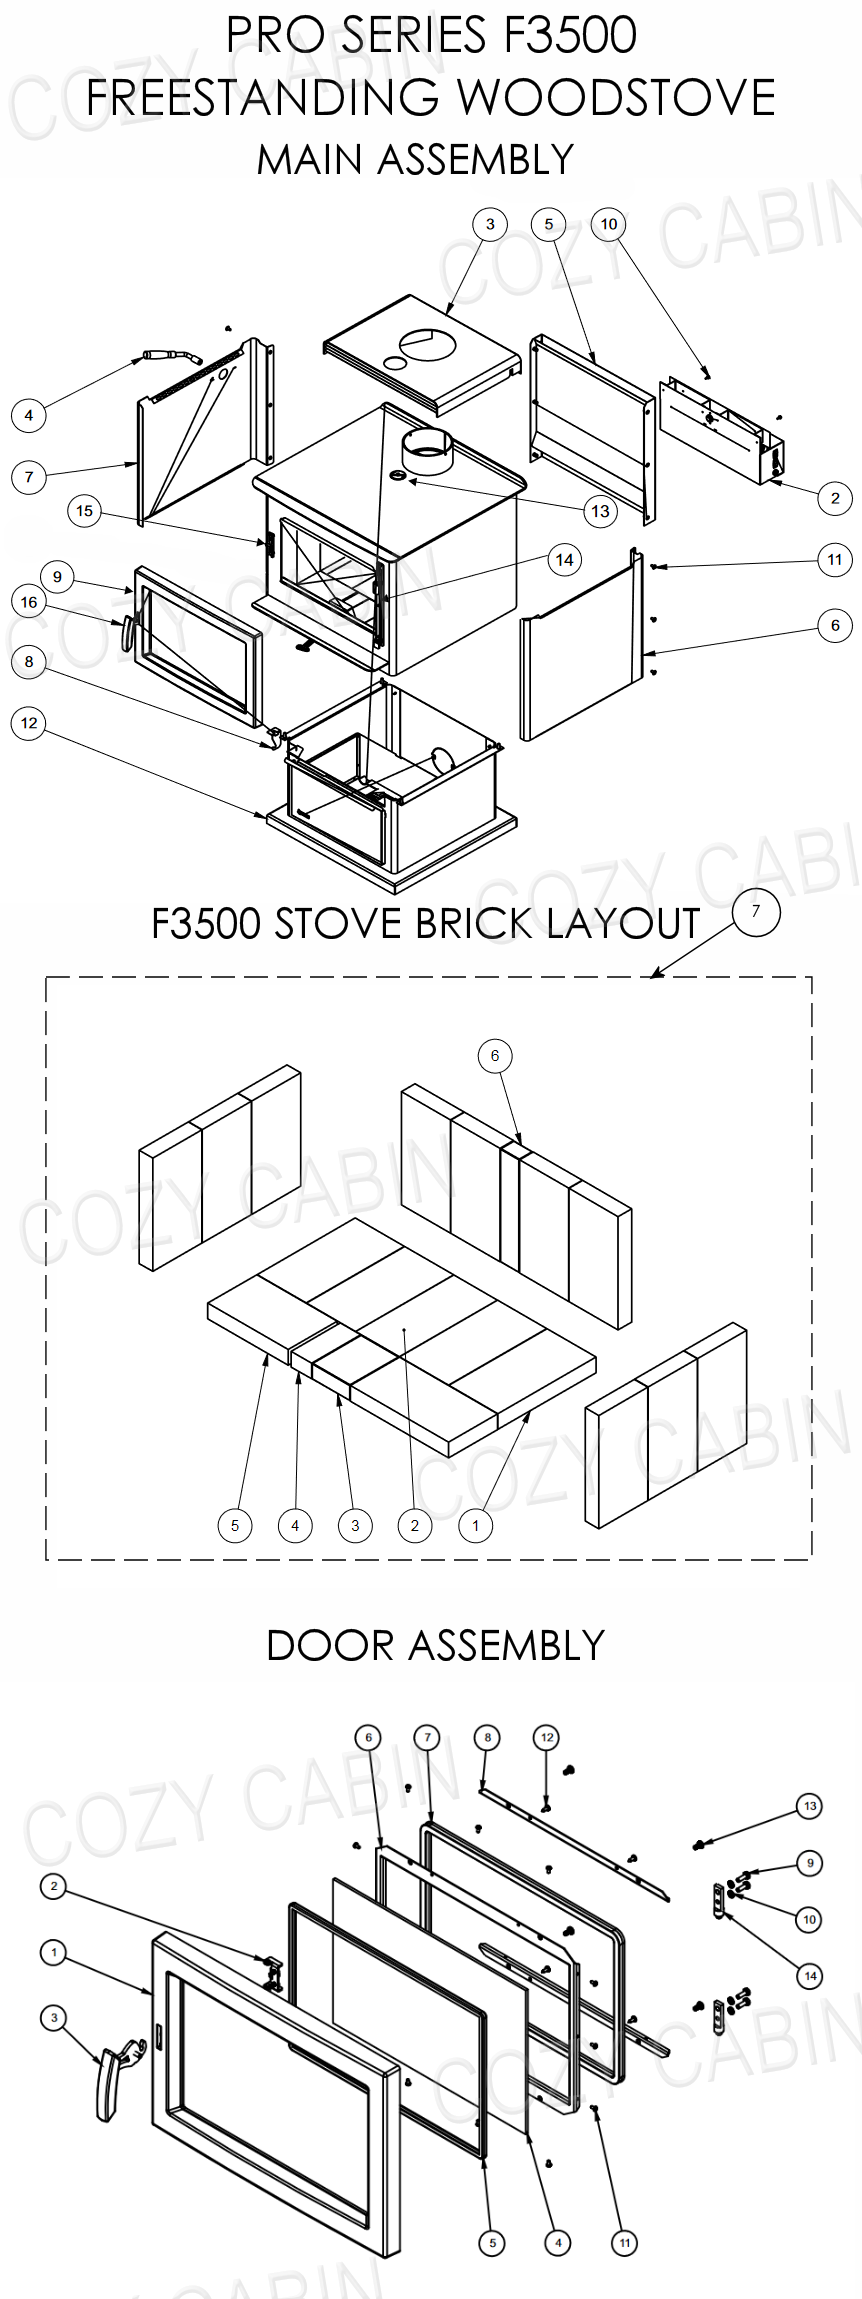 Pro Series Wood Stove (F3500) #F3500